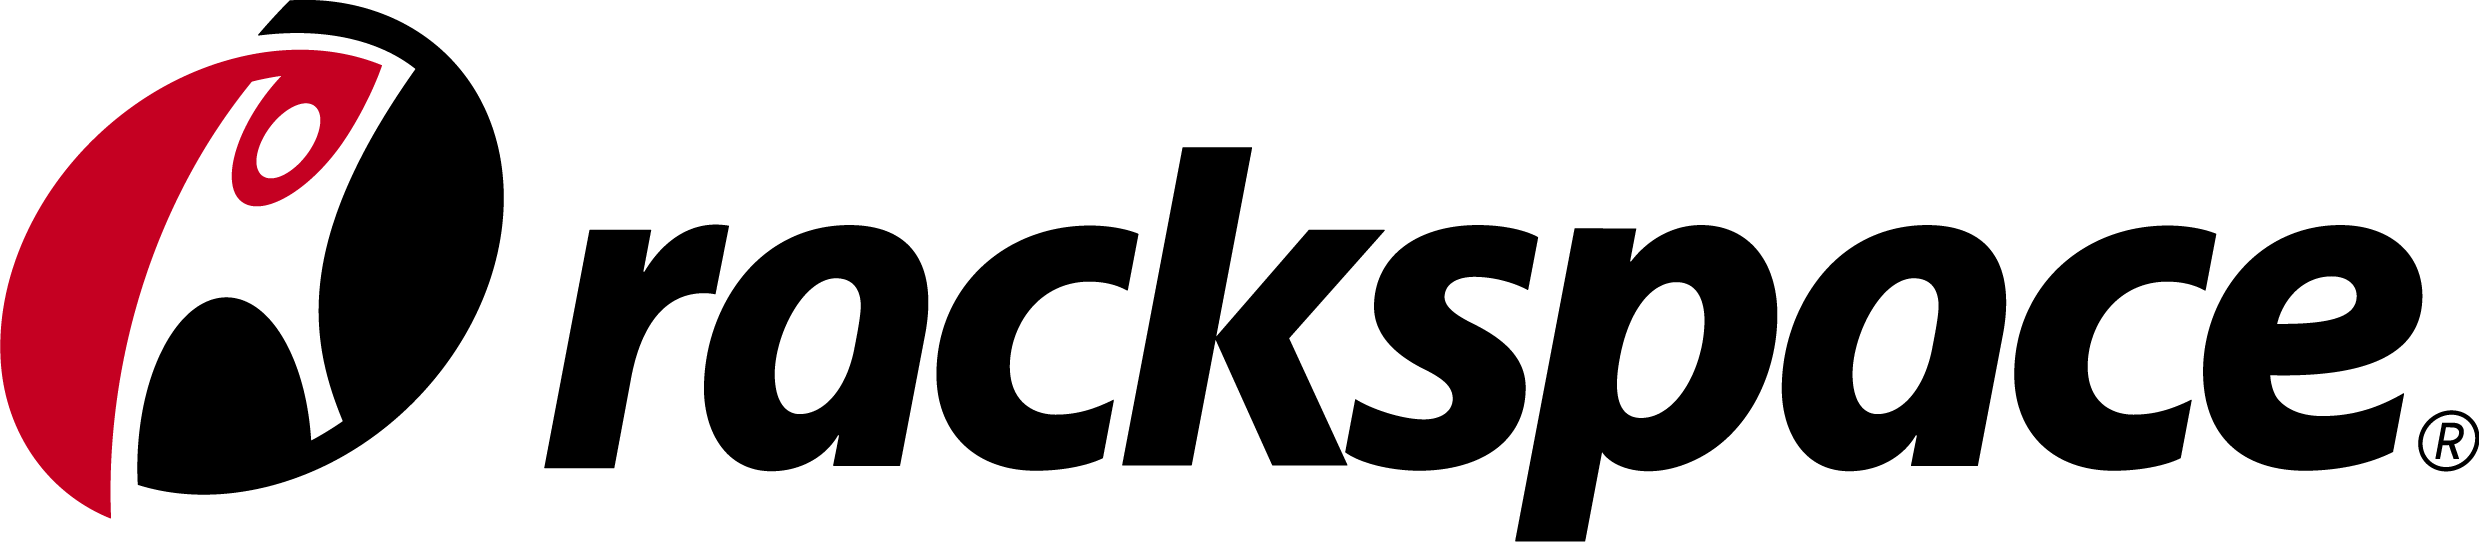 Public Cloud Rackspace OpenStack Logo - Rackspace: Company Profile, Data Center Locations